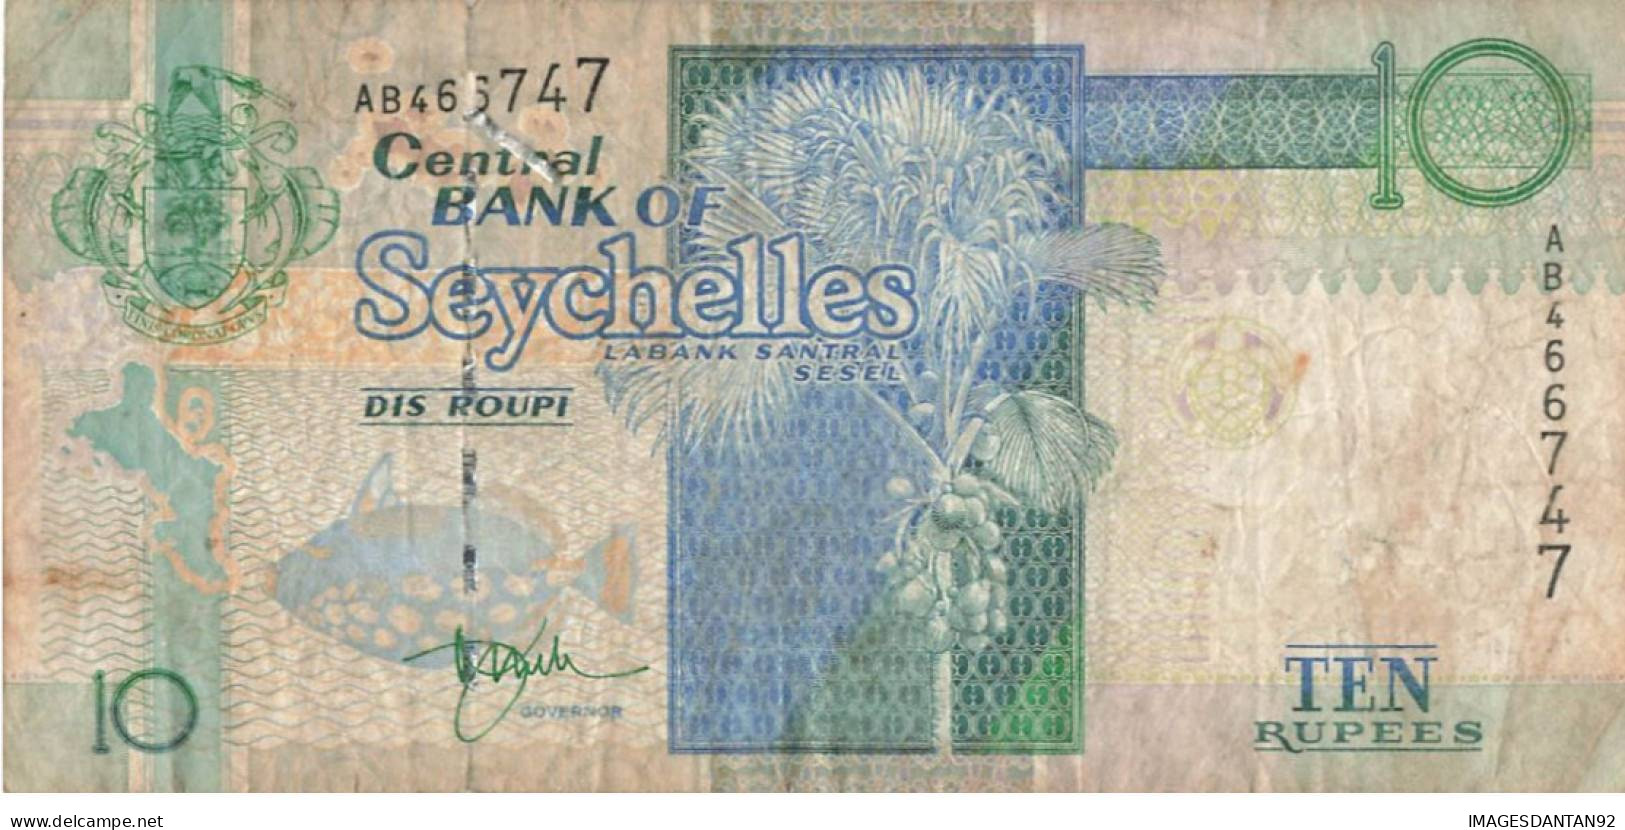 SEYCHELLES 25 ET 10 RUPEES BANK NOTE - Seychelles